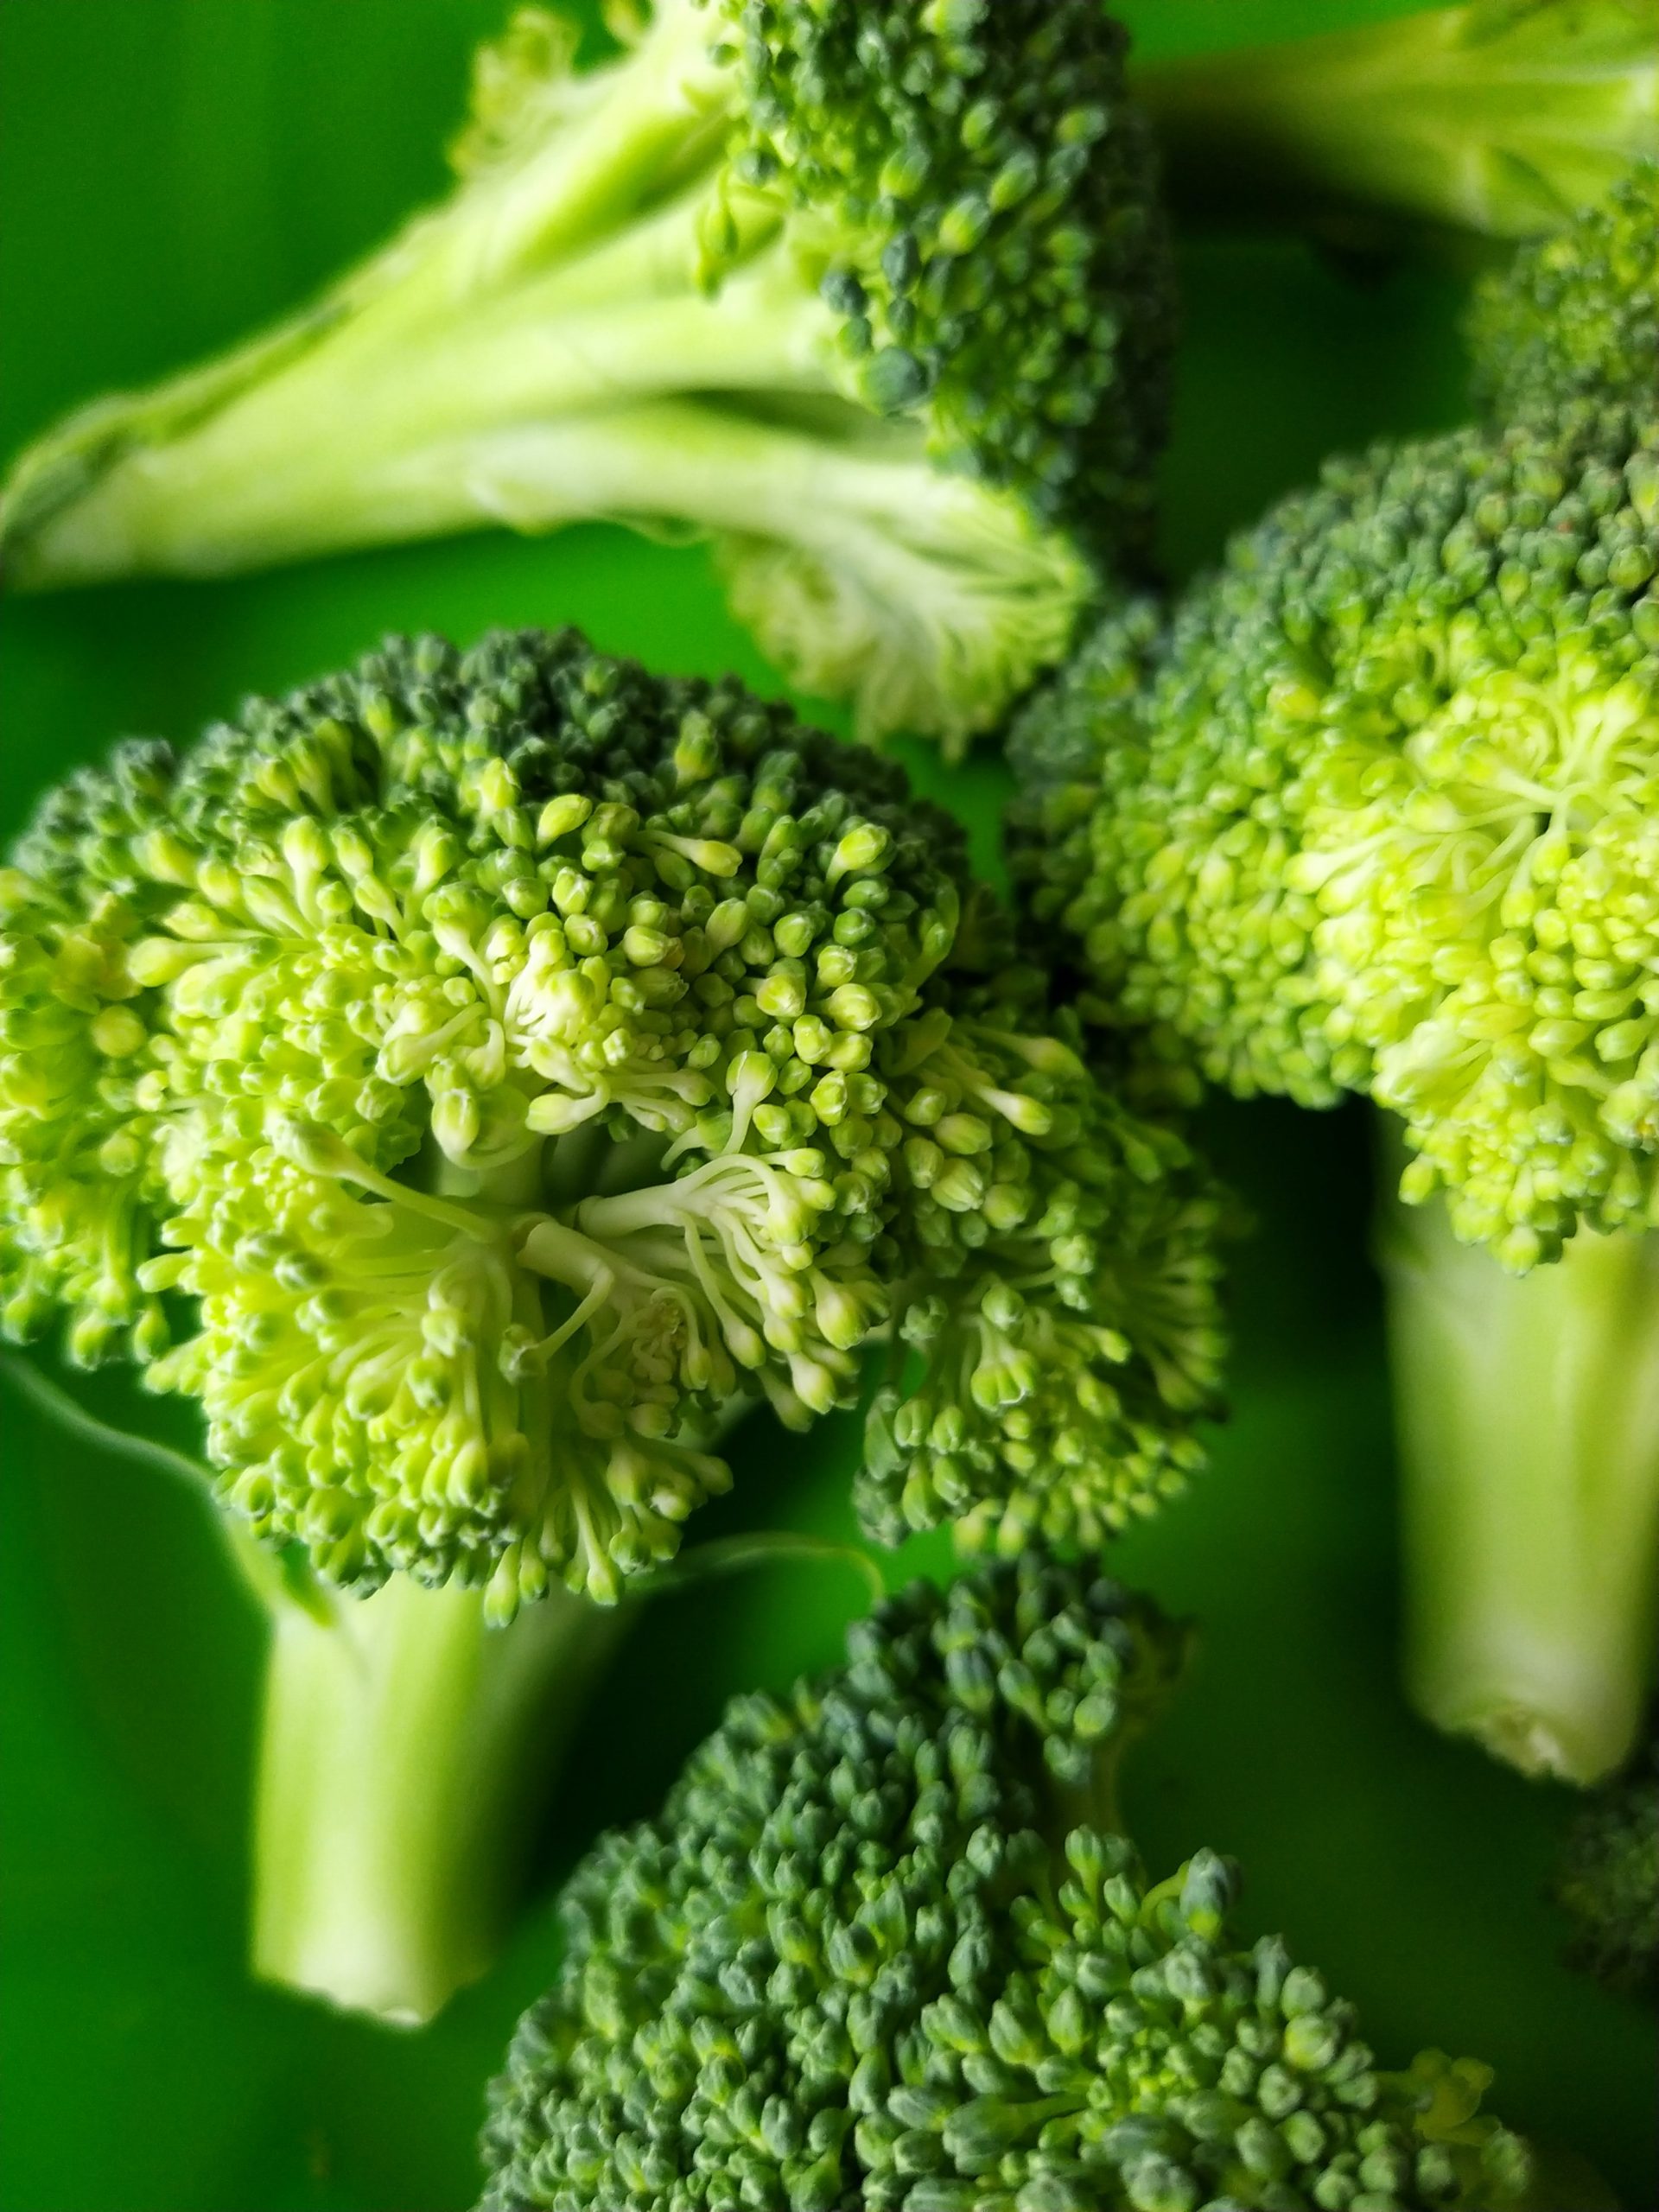 Does Broccoli Grow Underground?